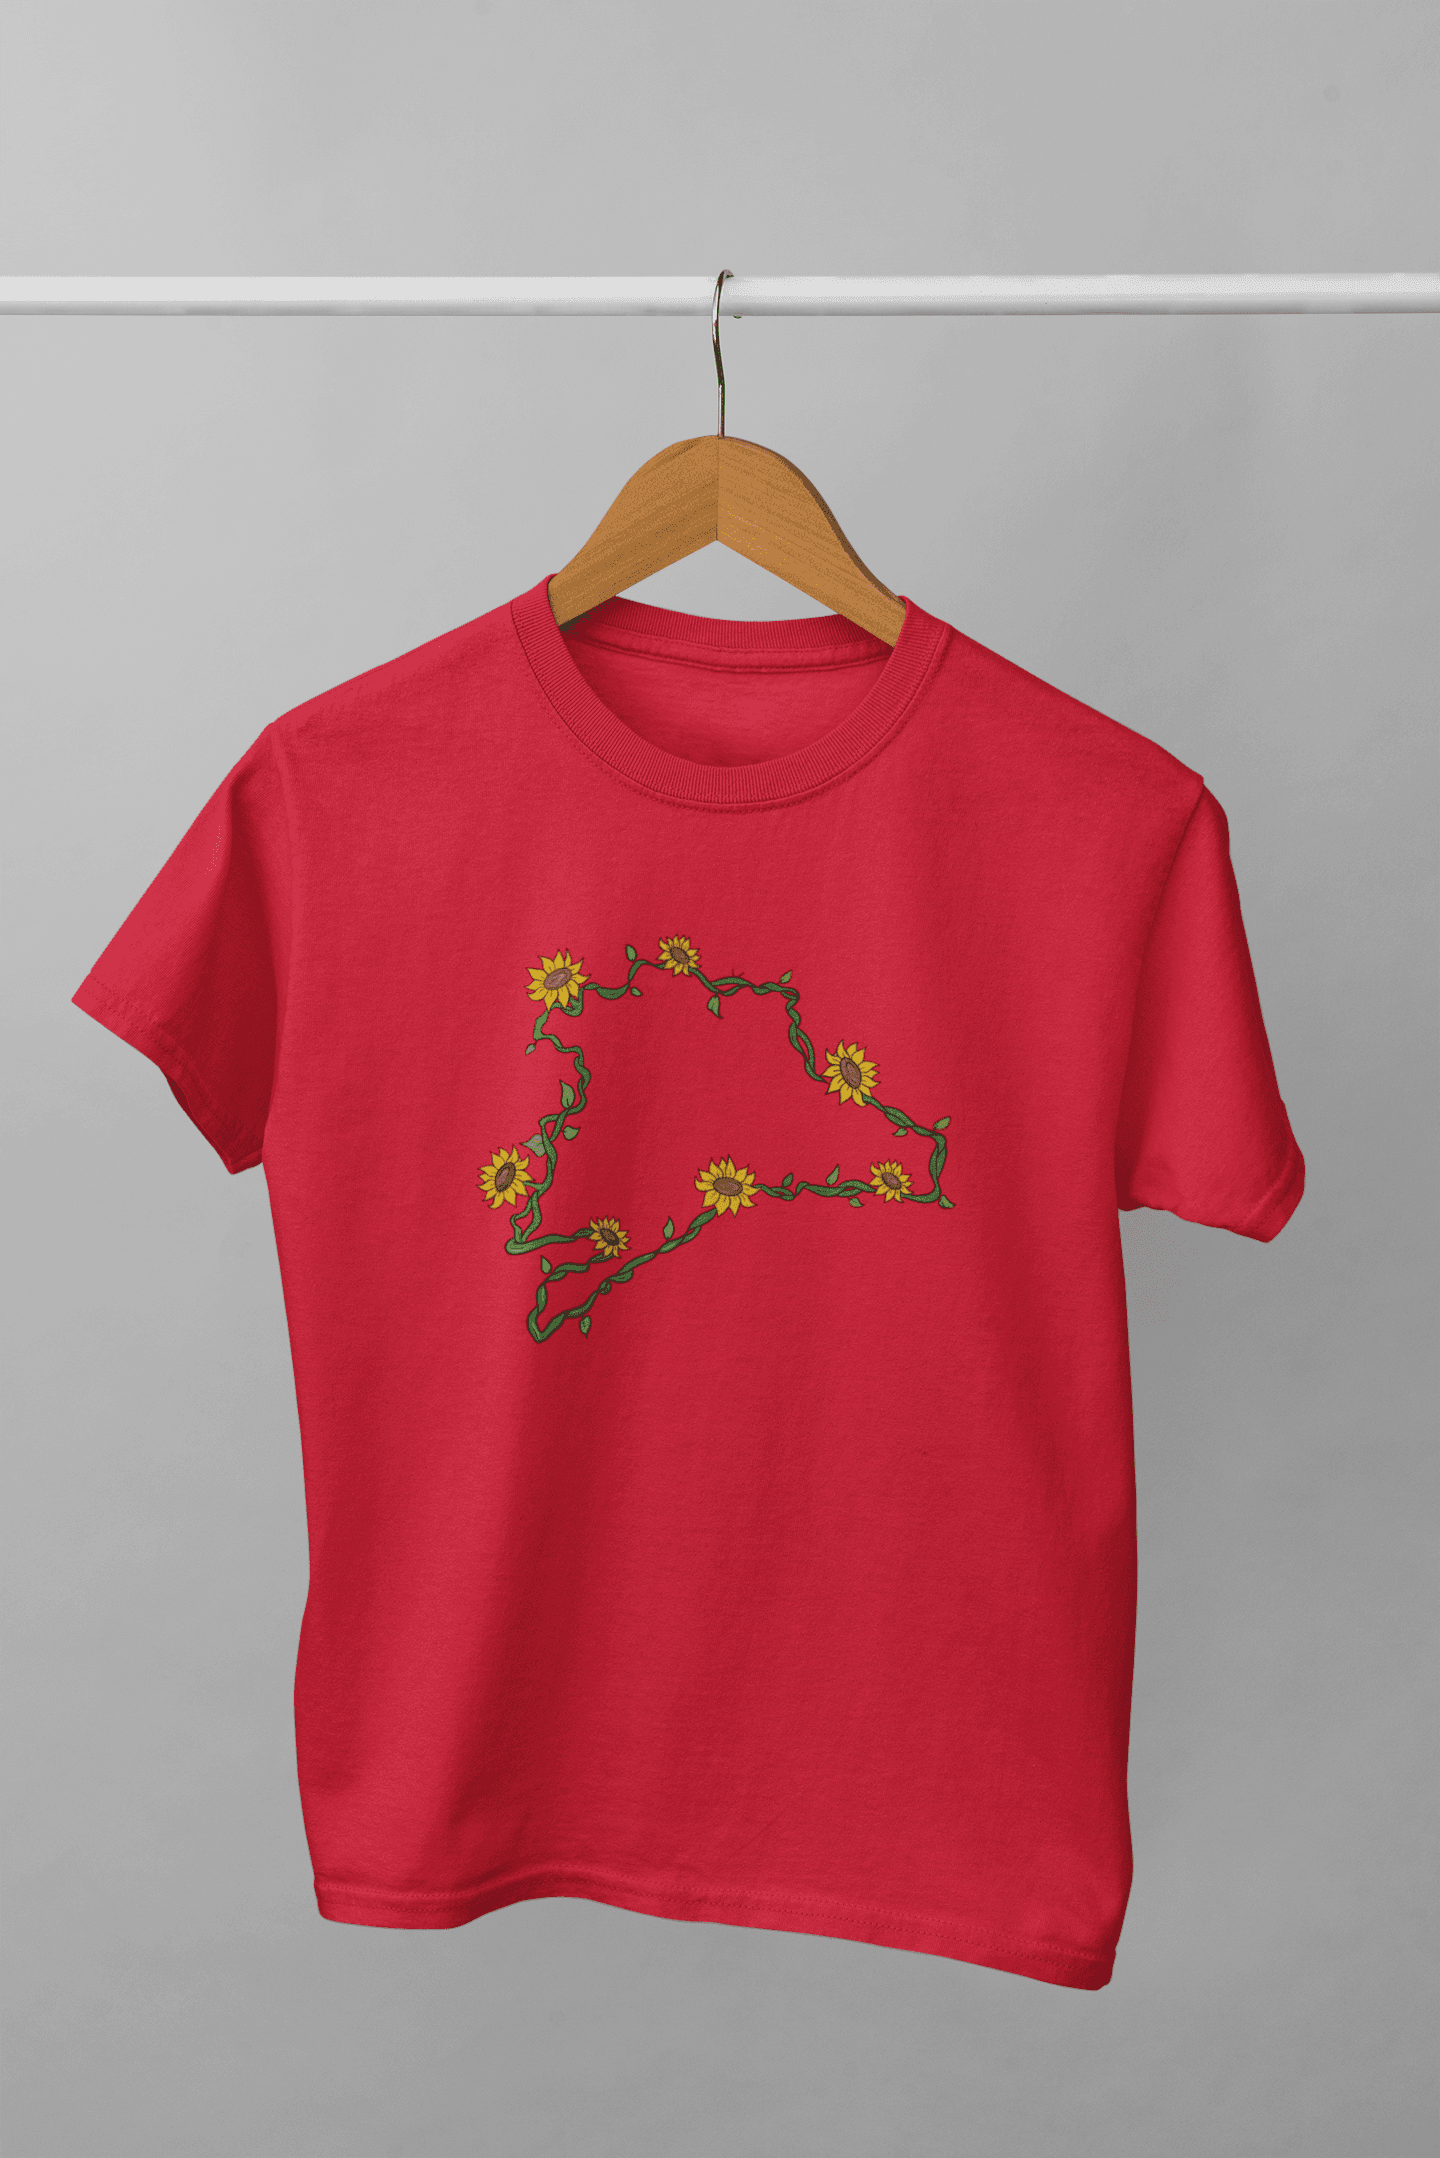 Gündendili Trakya (Çocuk Tişörtü)